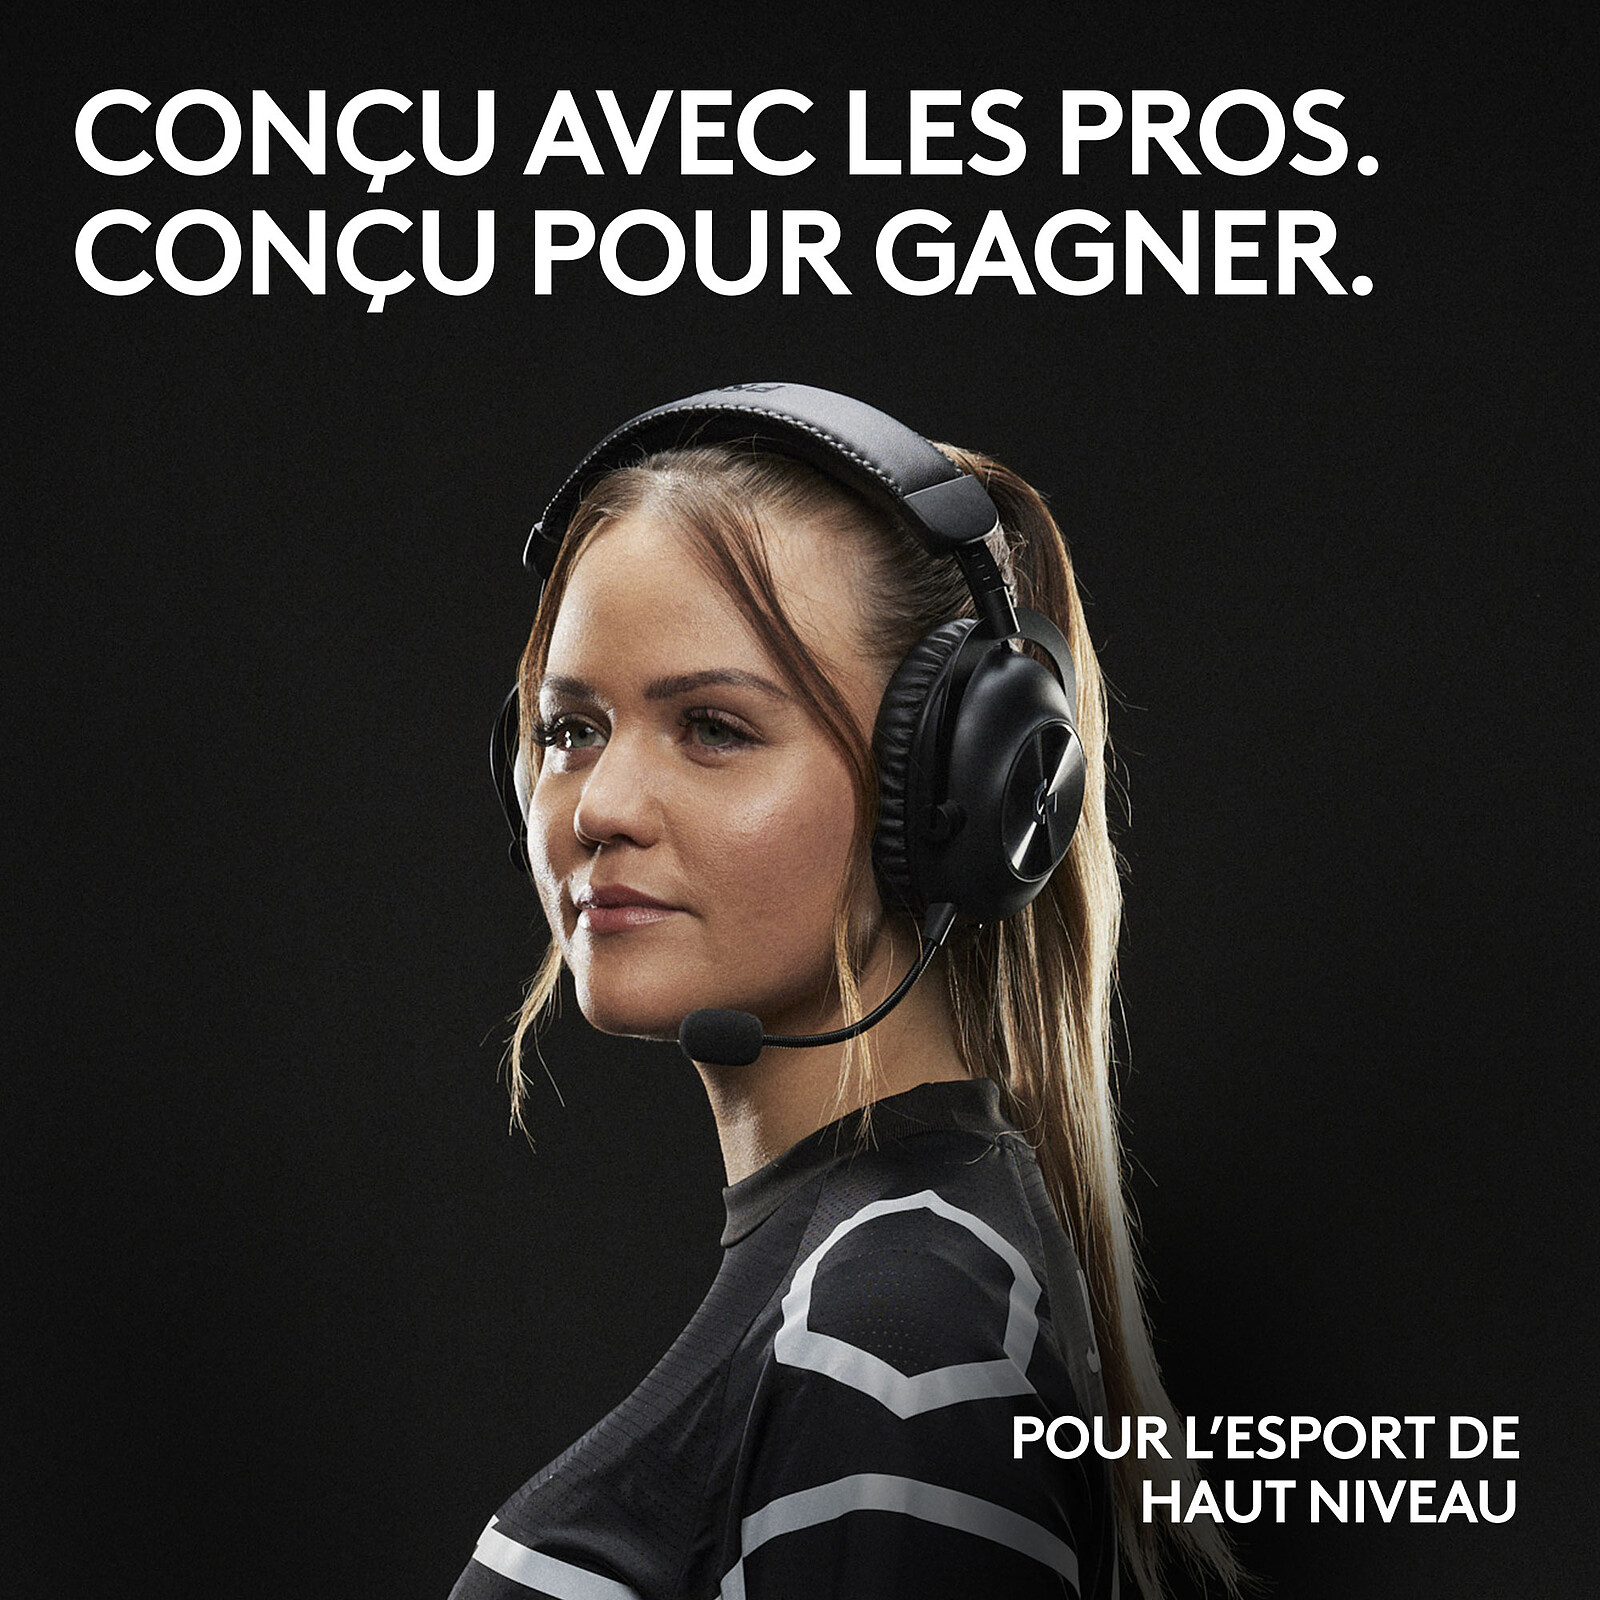 Logitech G Pro X Gaming Headset Negro - Auriculares microfono - LDLC